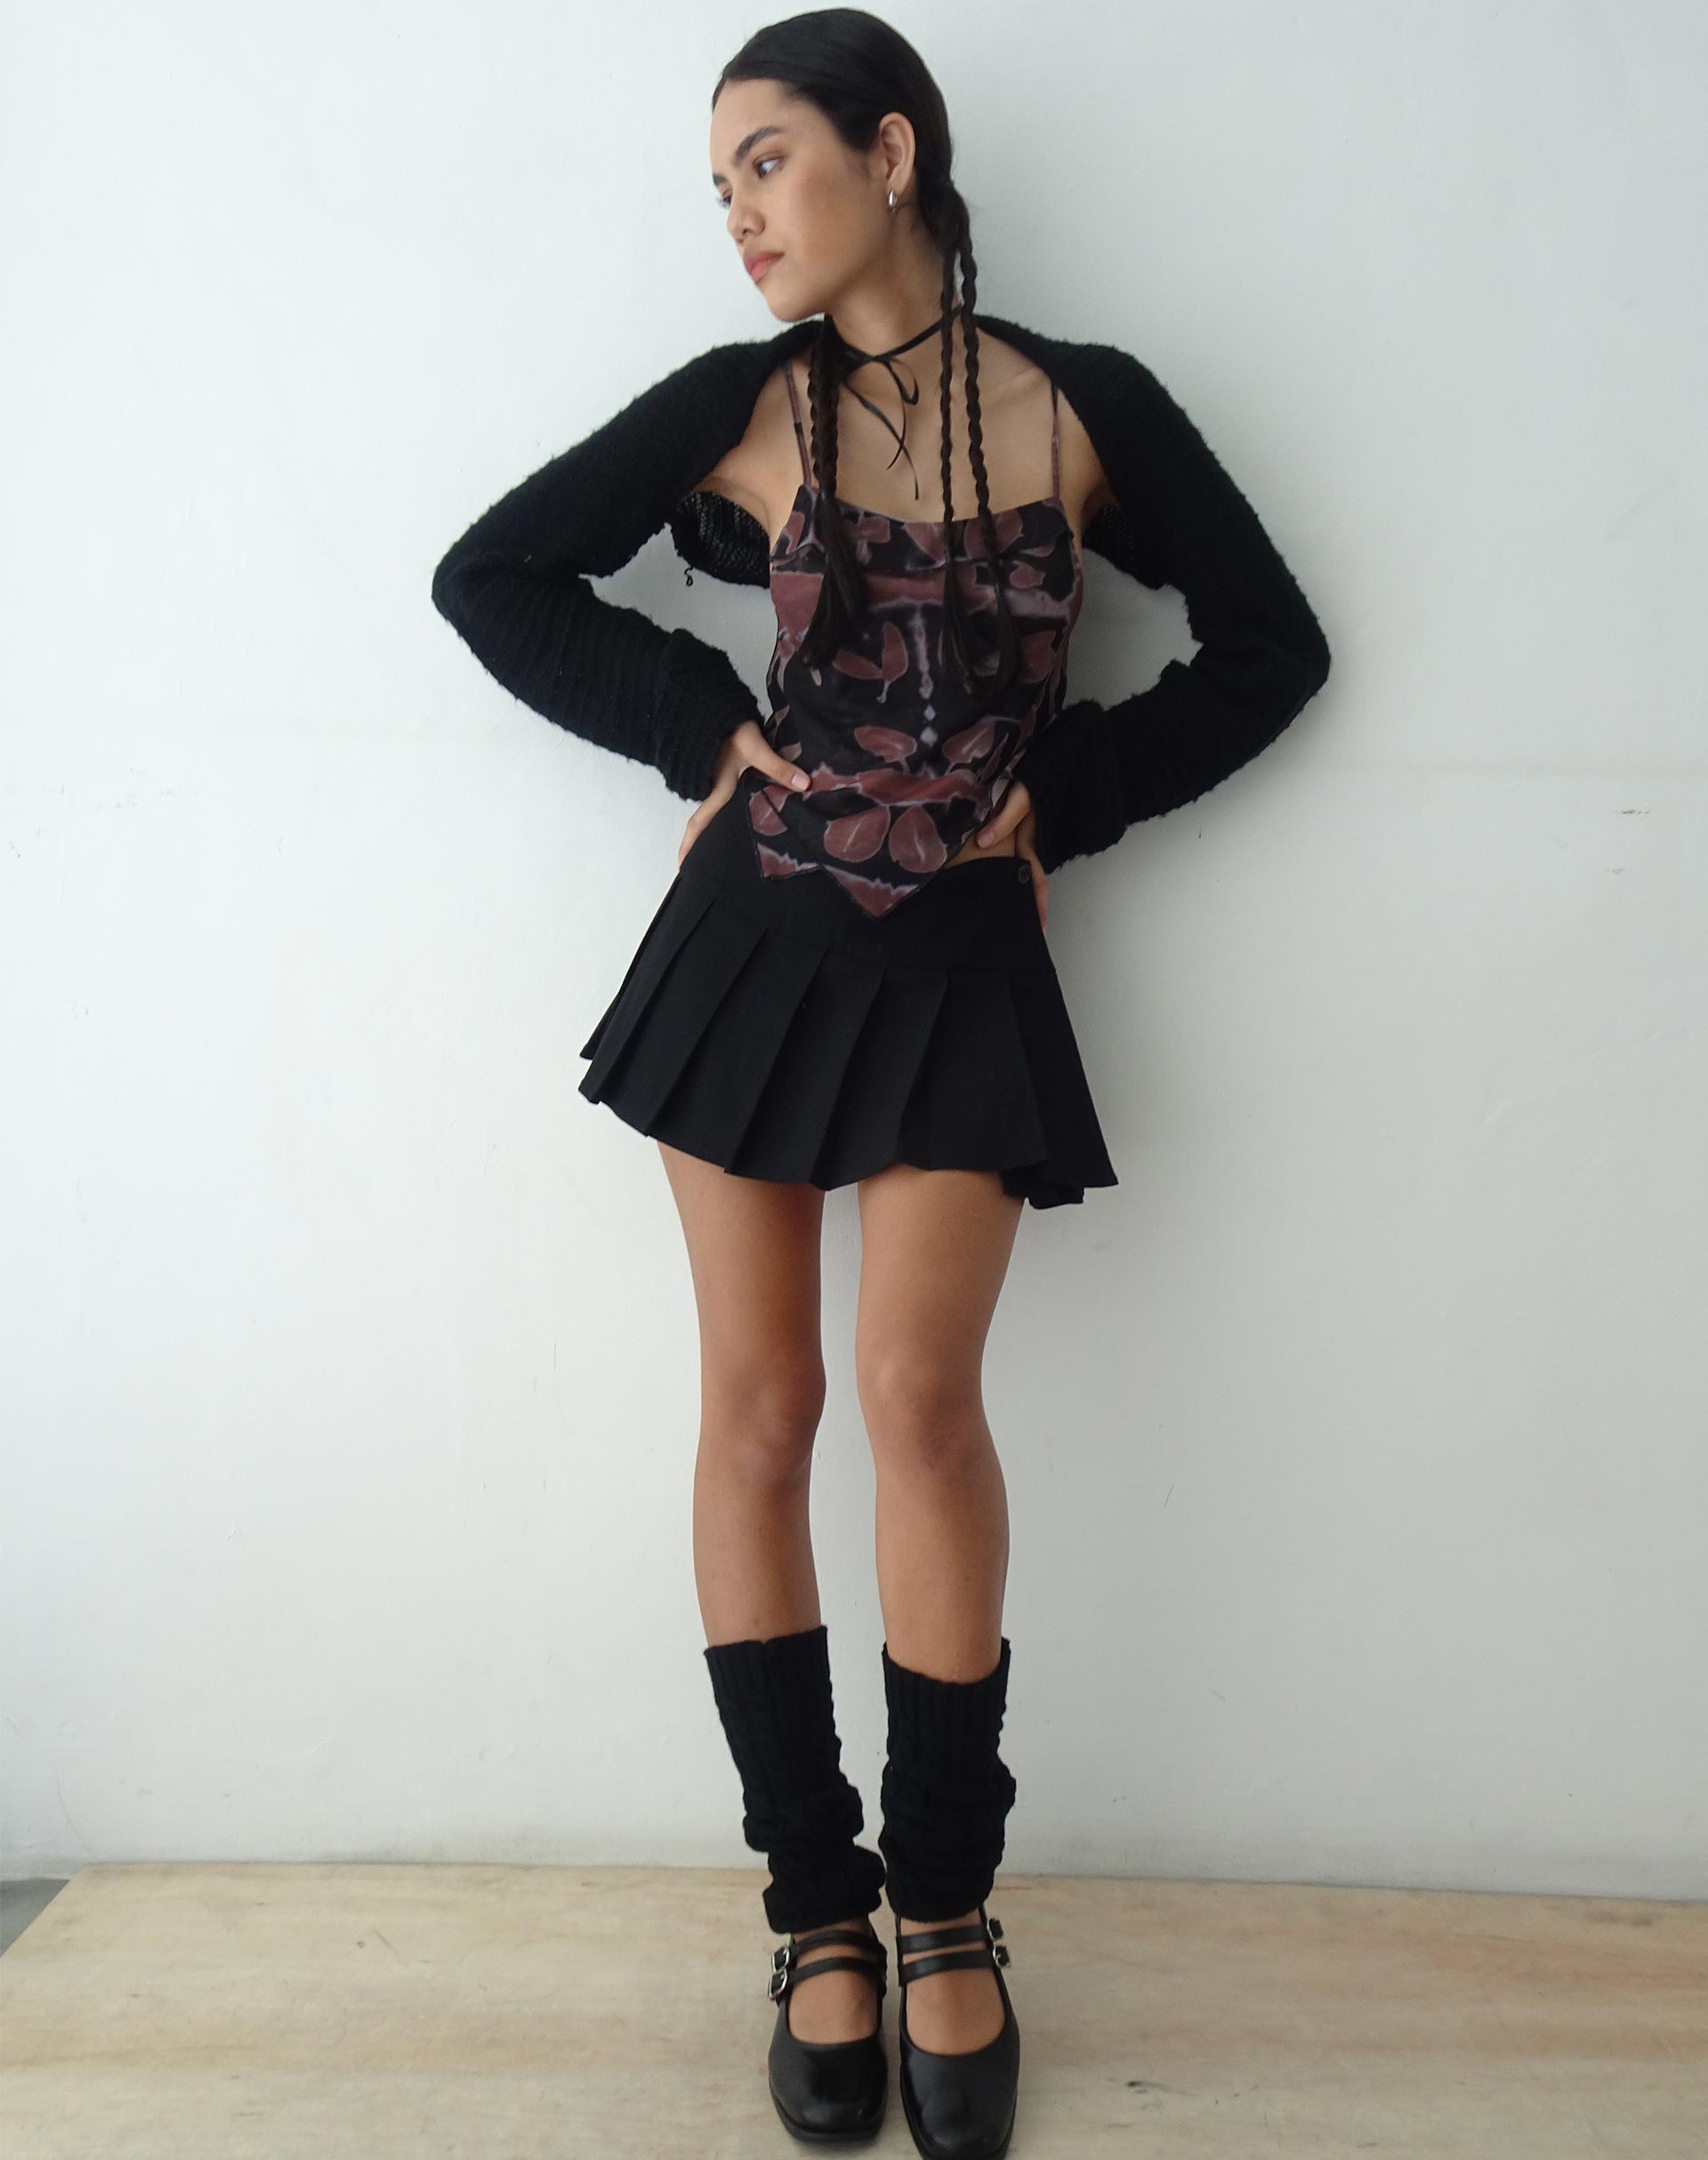 image of MOTEL X OLIVIA NEILL Casini Pleated Skirt in Tailoring Black